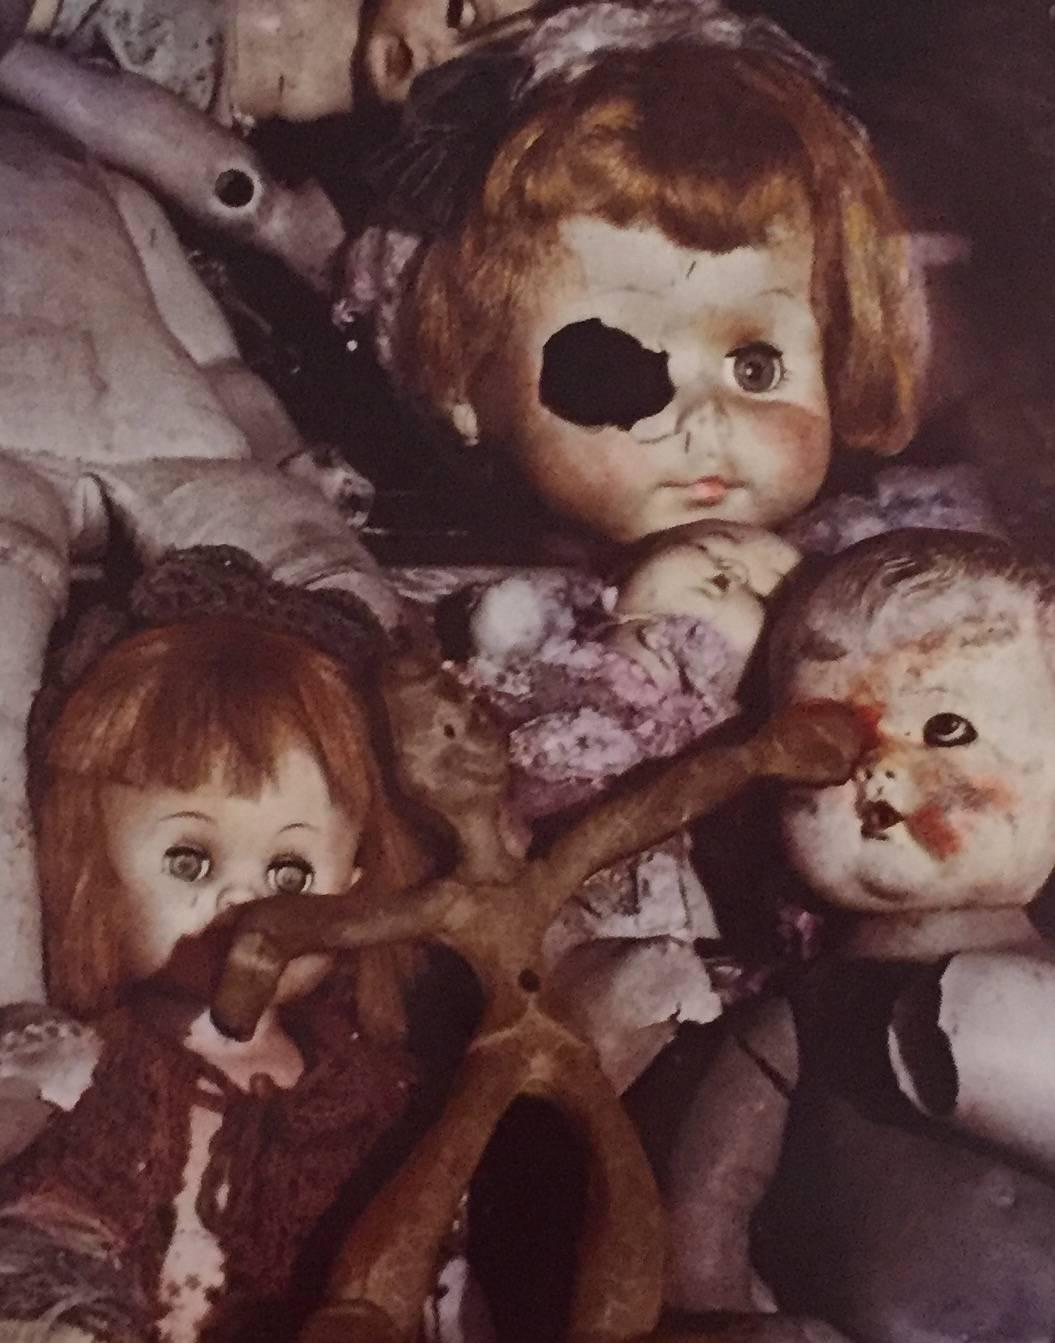 bruno dolls